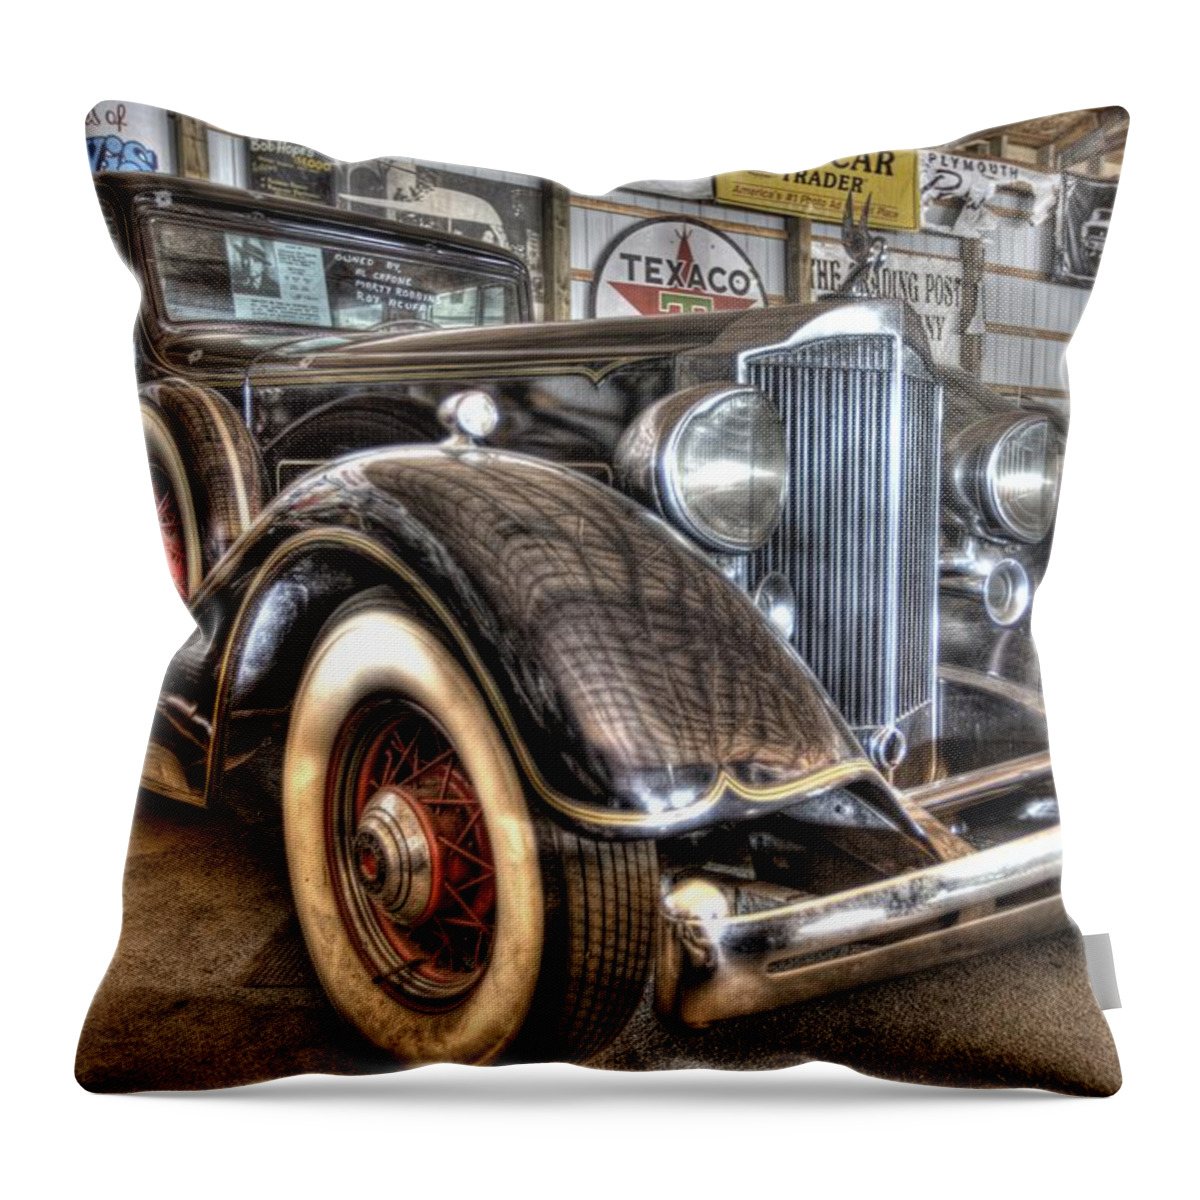 Al Capone Throw Pillow featuring the photograph Al Capone's Packard by Nicholas Grunas